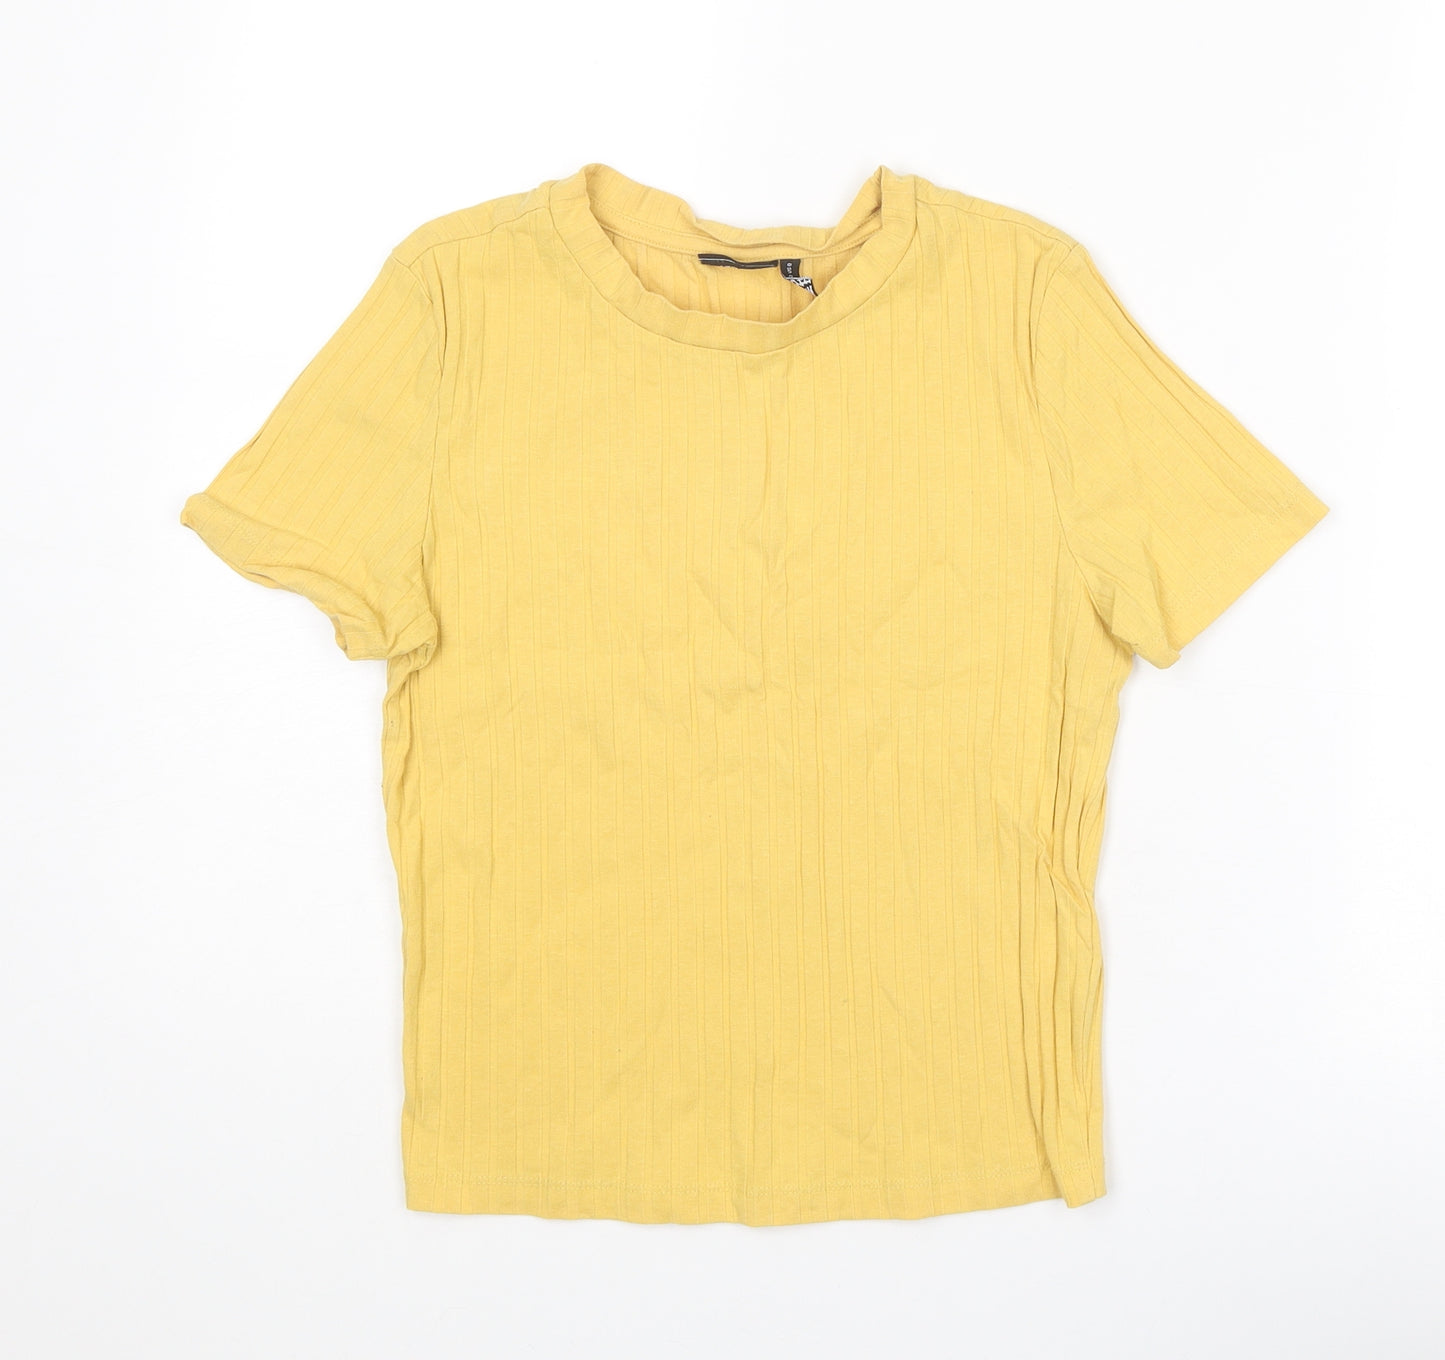 ASOS Womens Yellow Cotton Basic T-Shirt Size 12 Round Neck